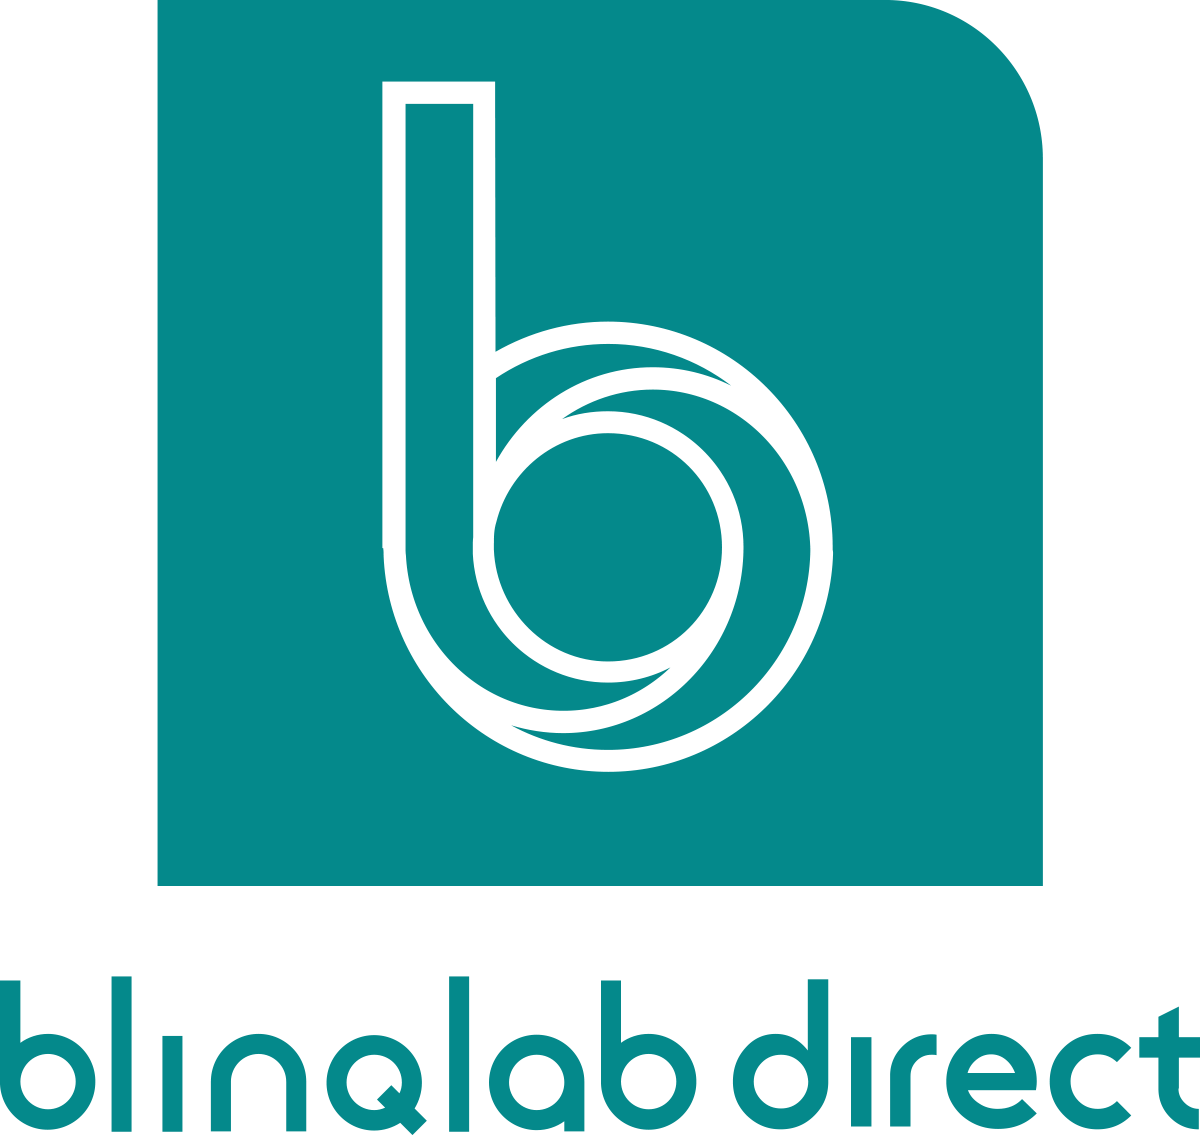 Blinqlab Direct